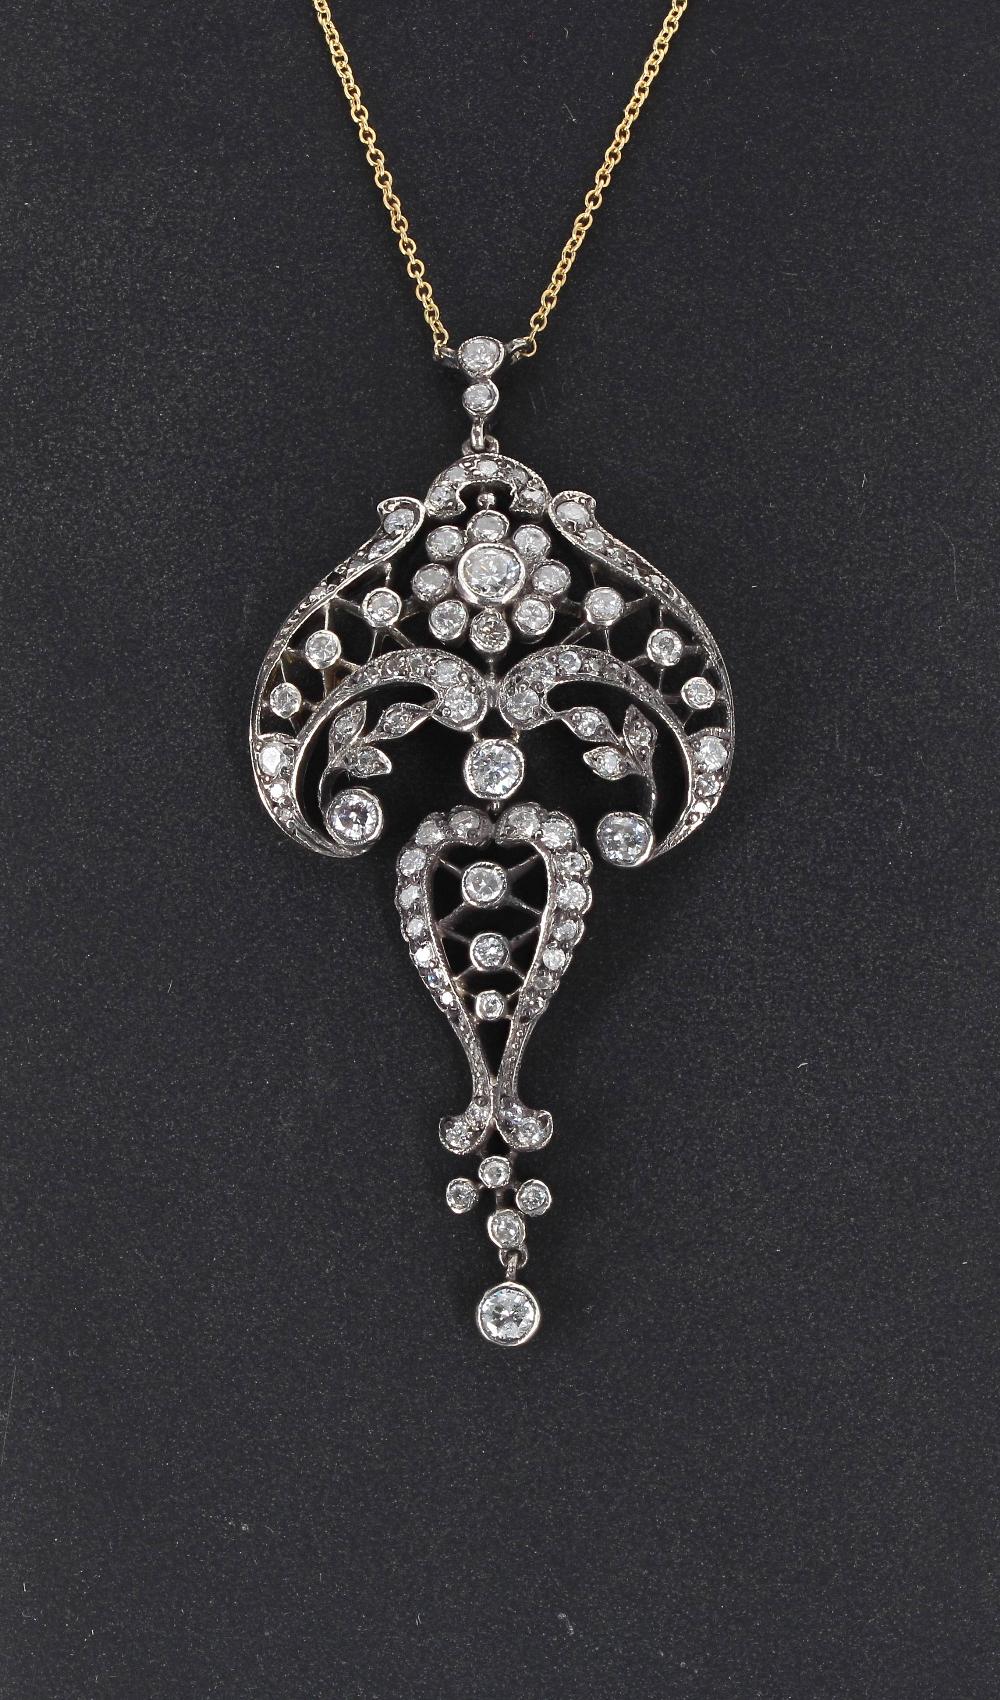 Victorian style ornate diamond scroll openwork pendant, set with round brilliant-cut diamonds, - Image 2 of 3